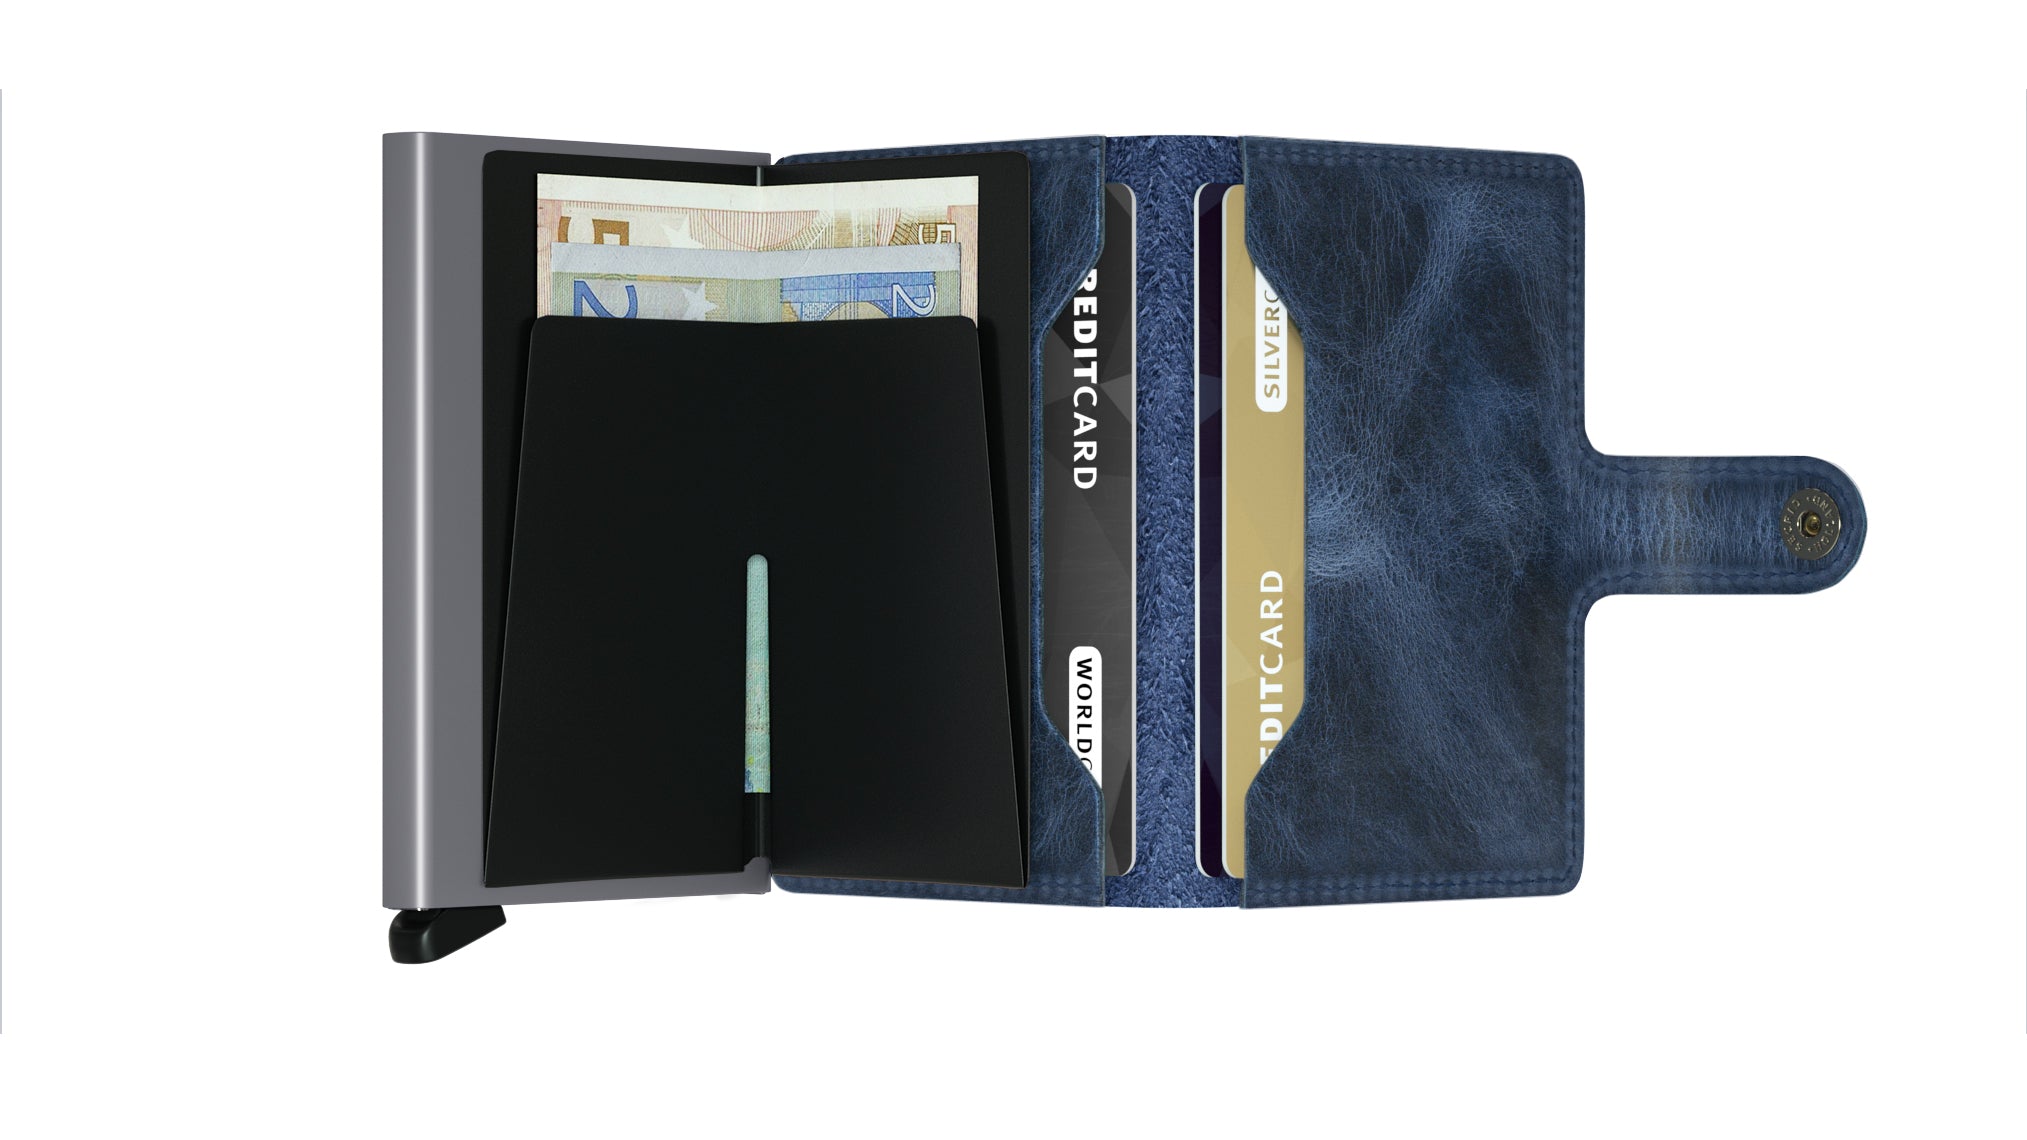 Secrid - Mini Wallet - Vintage Blue